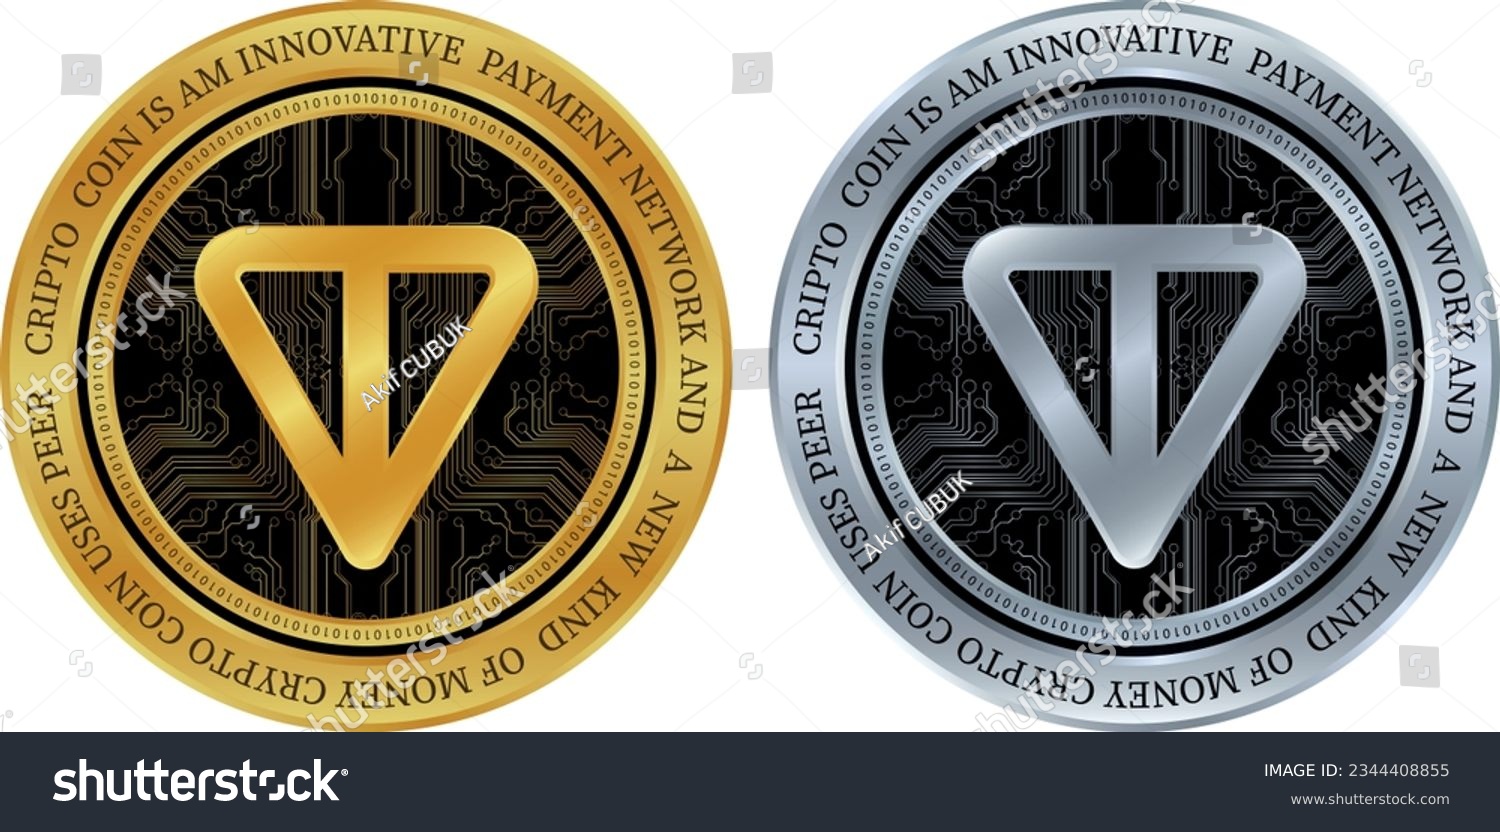 SVG of toncoin-ton virtual currency metallic money illustrations. vector illustrations. 3d illustrations. svg